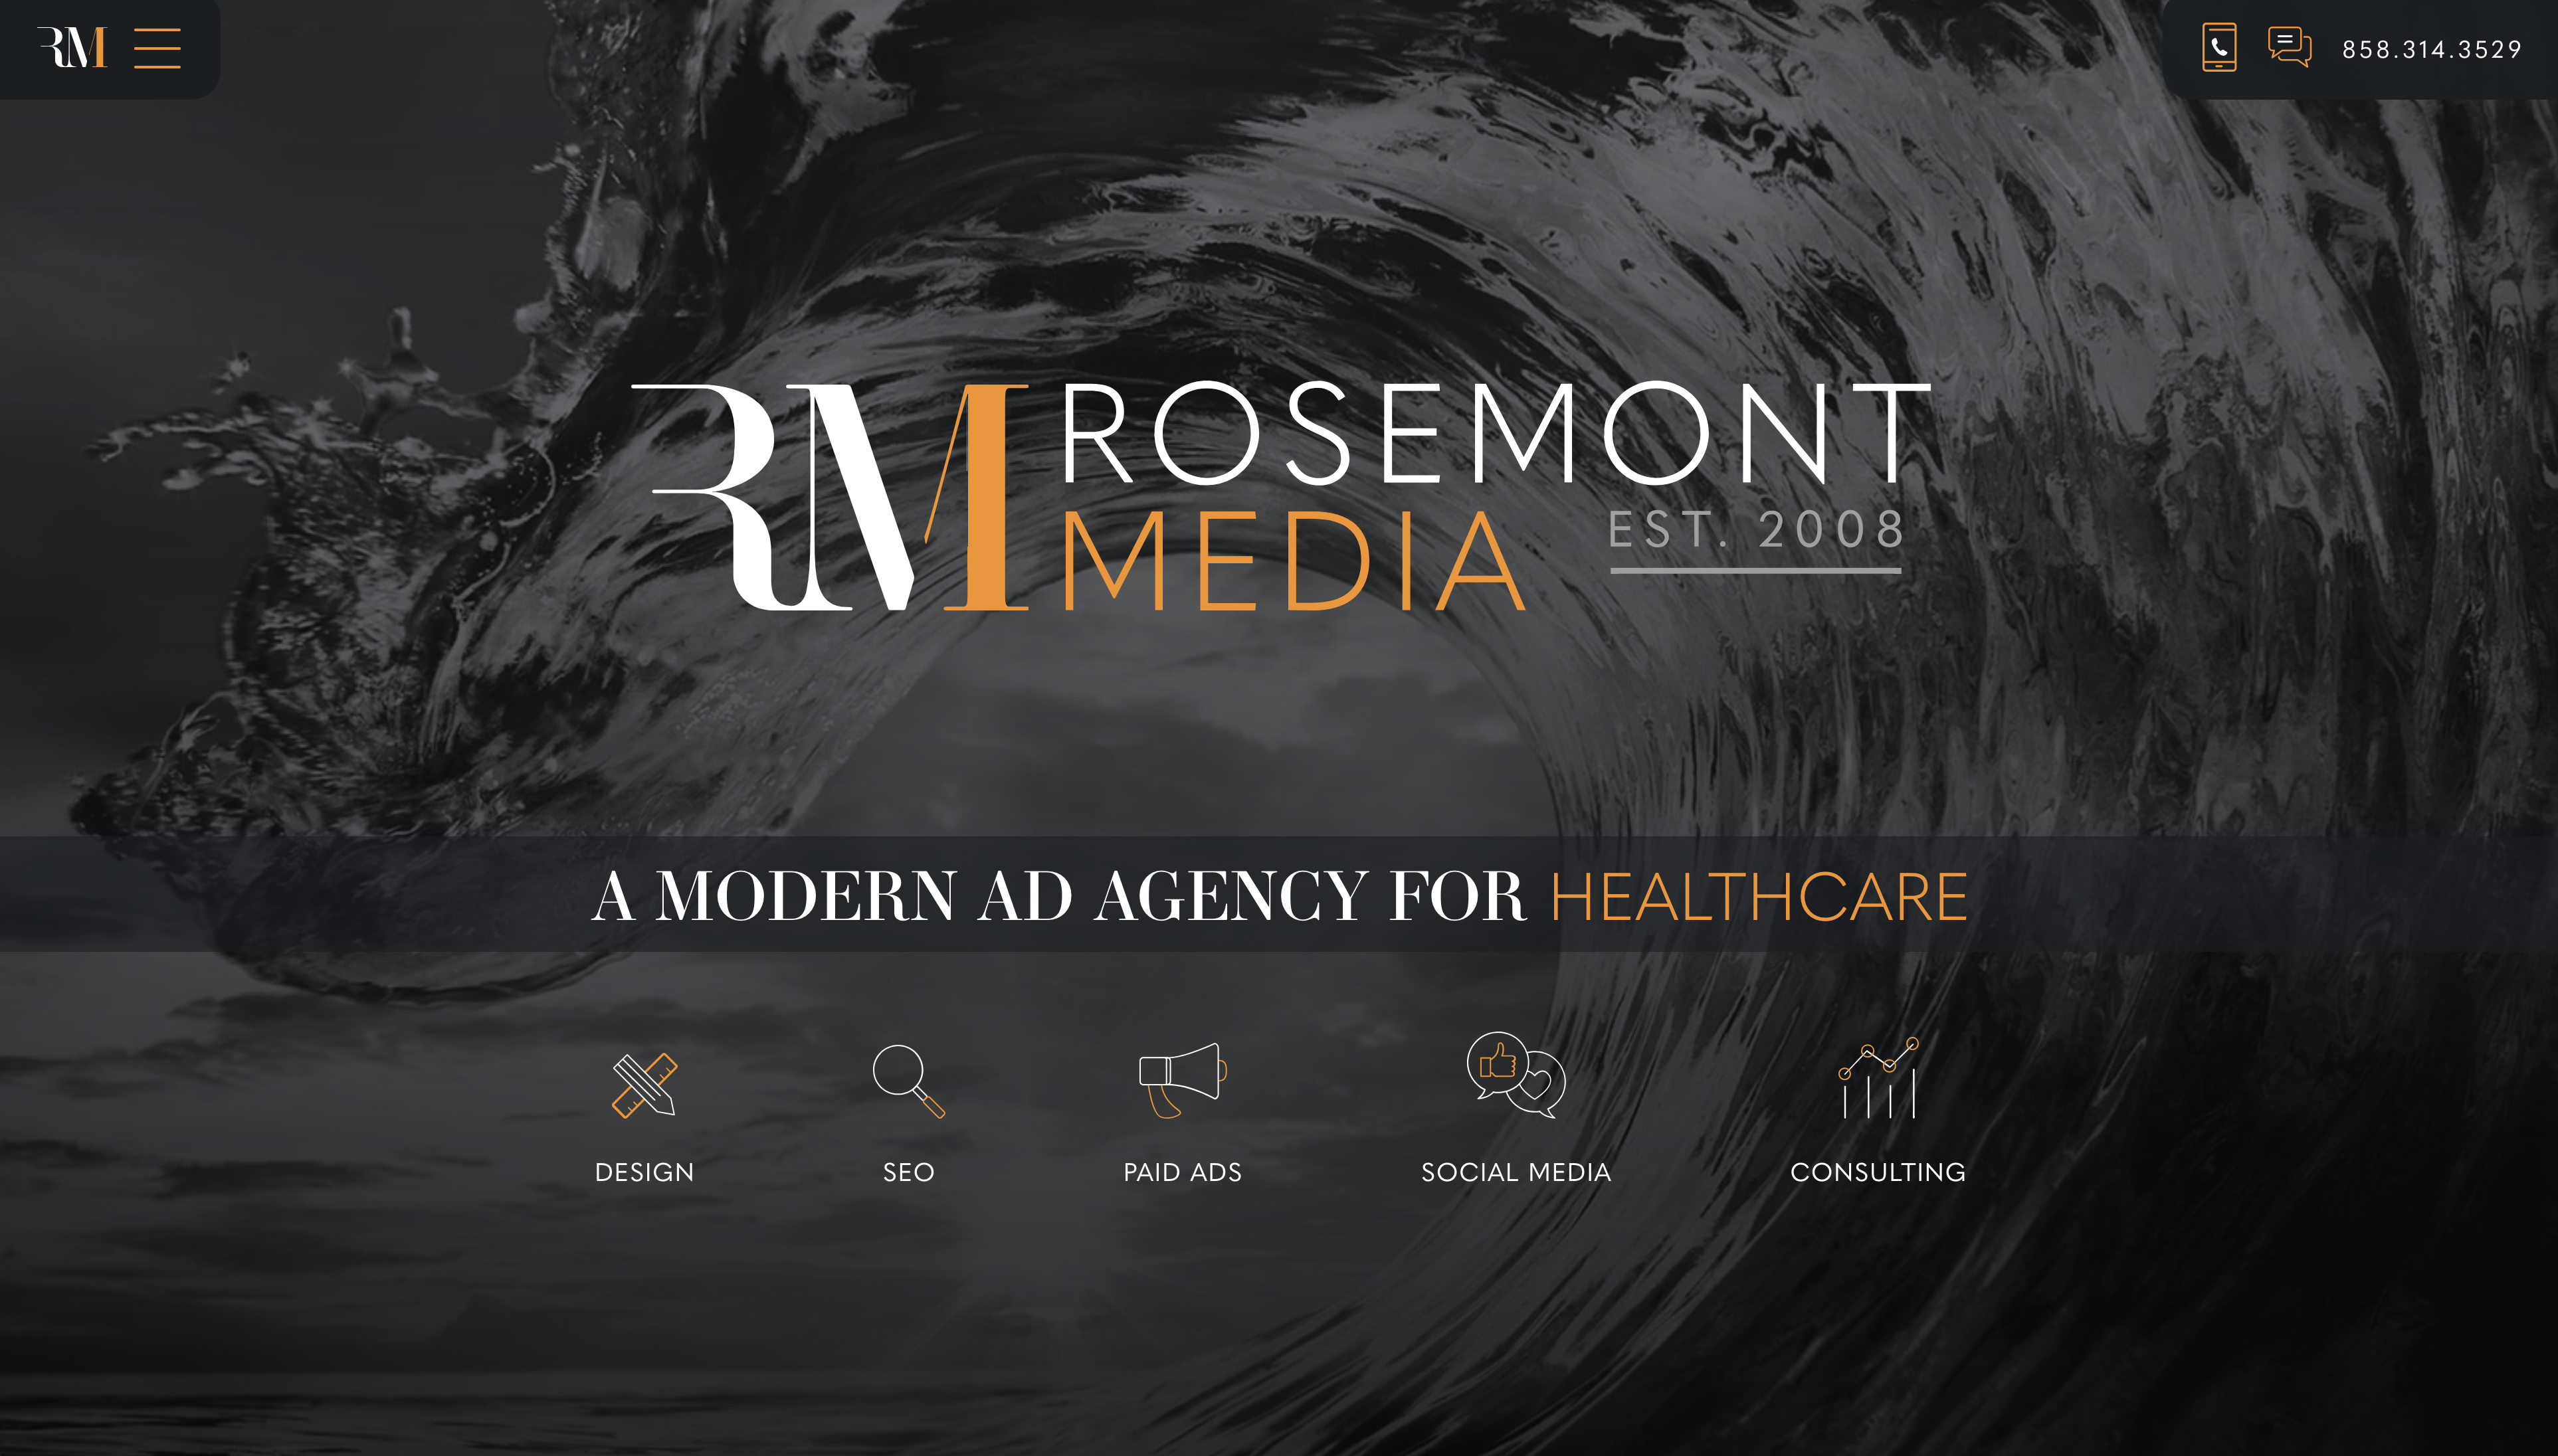 Rosemont Media Debuts State-of-the-Art New Website Design